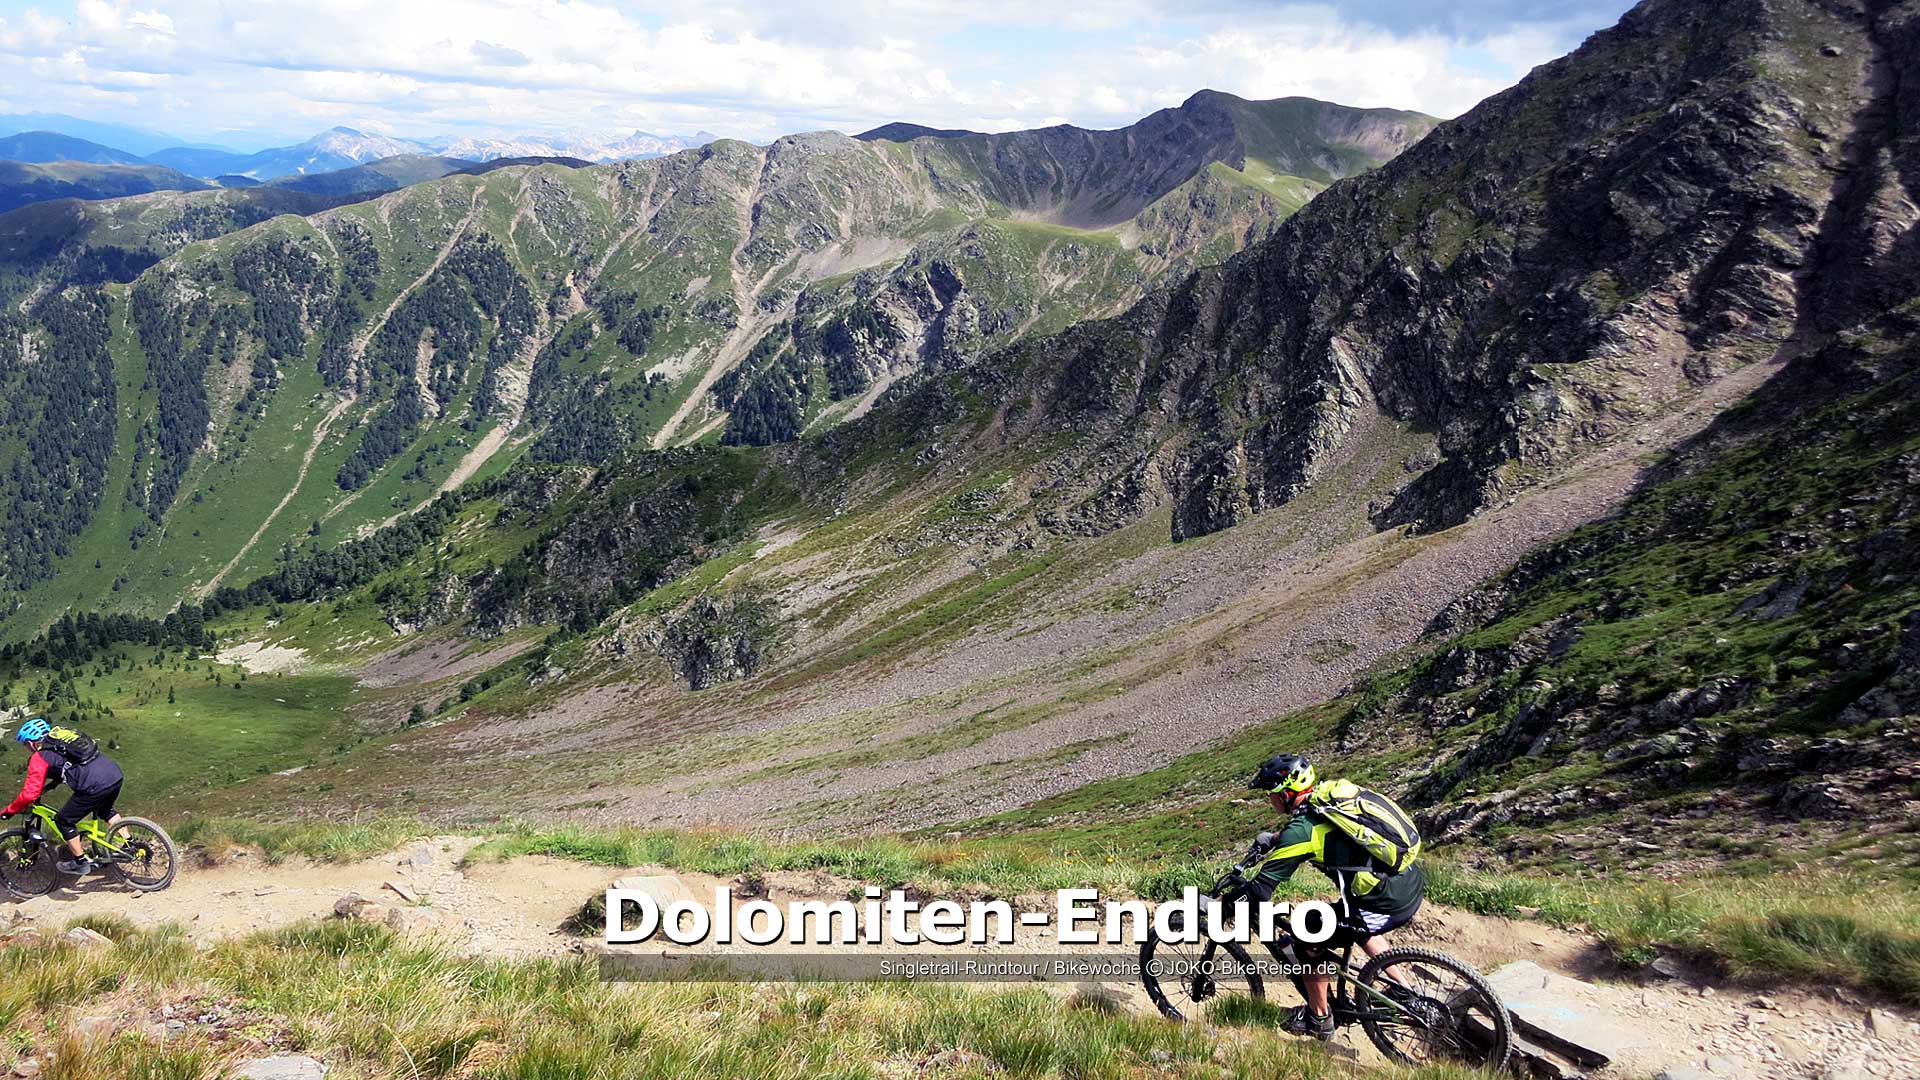 MTB: Enduro-Singletrail Dolomiten-Rundtour